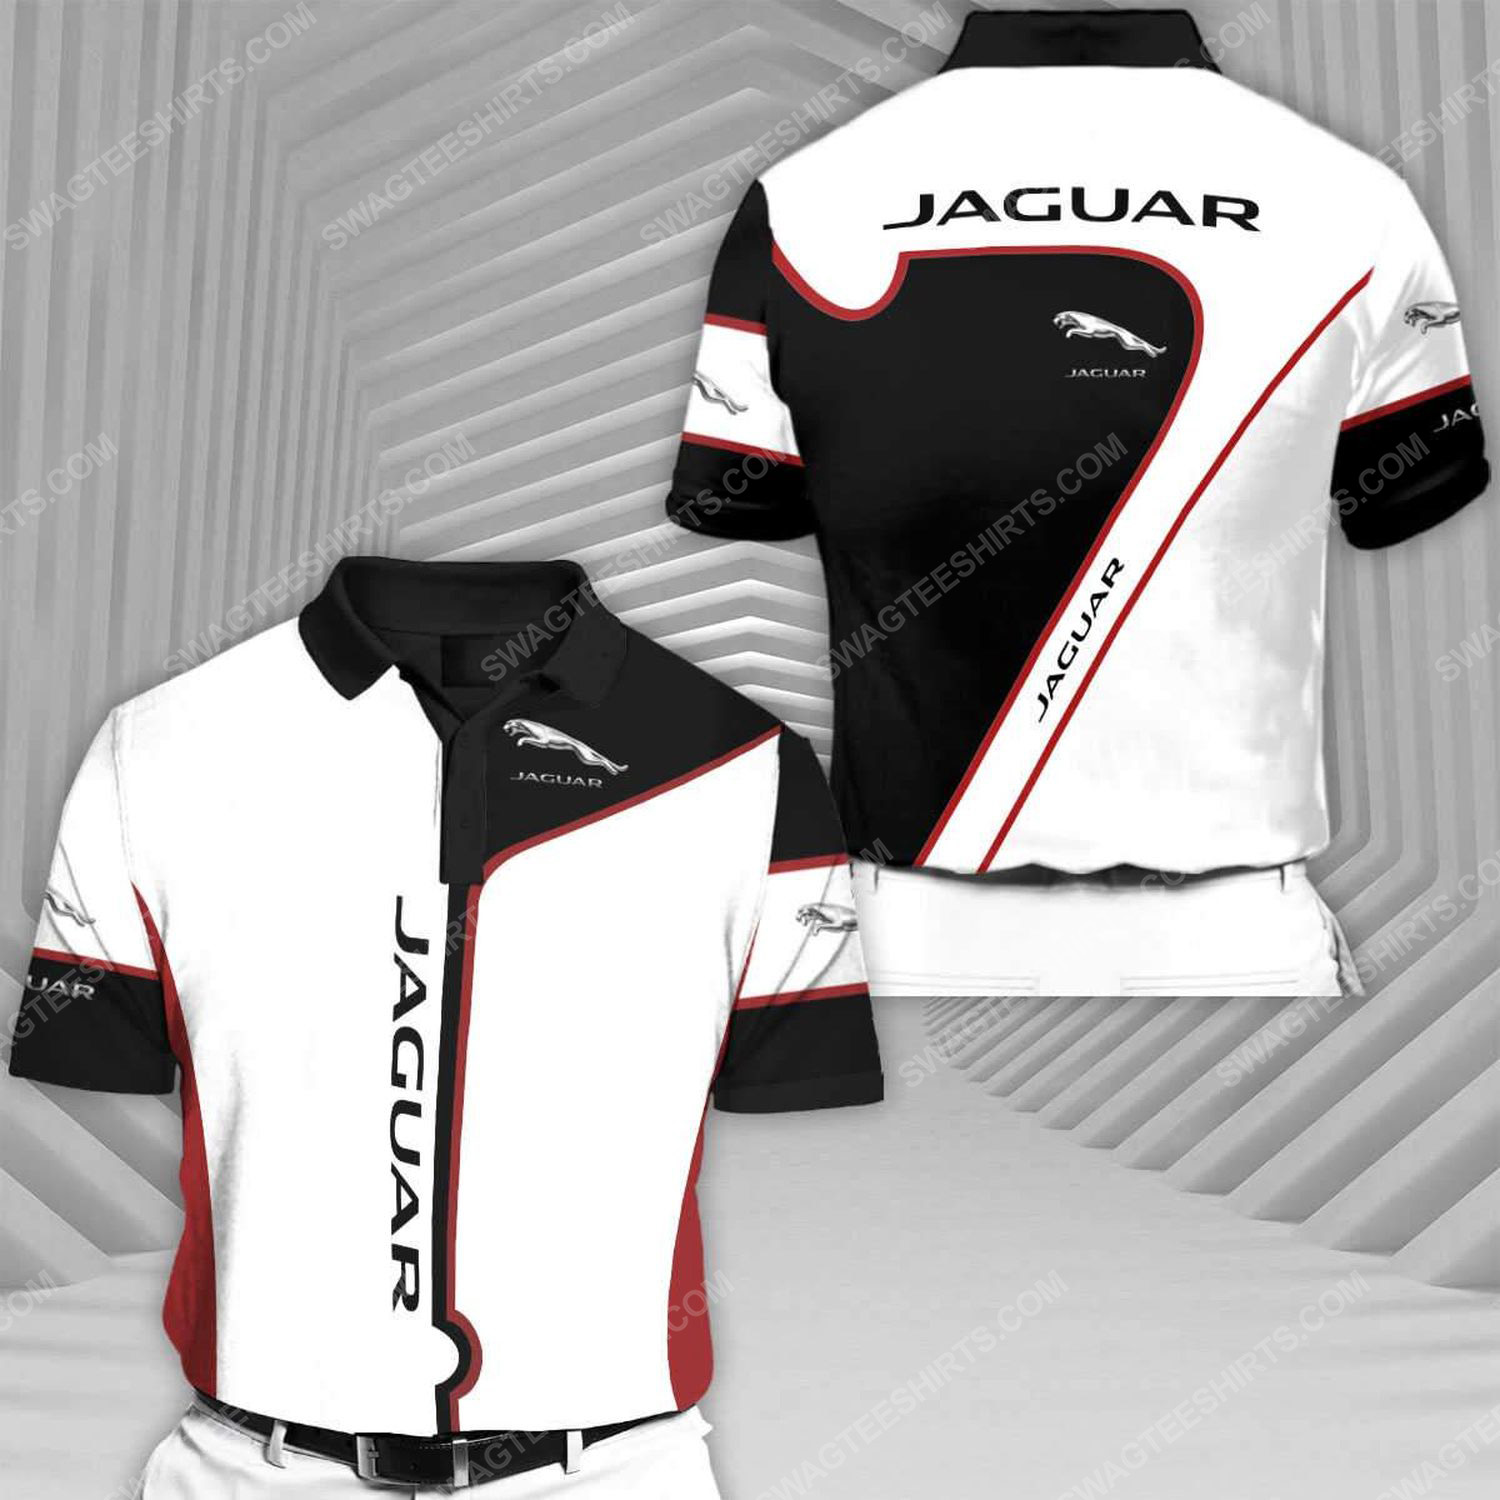 Jaguar sports car racing all over print polo shirt